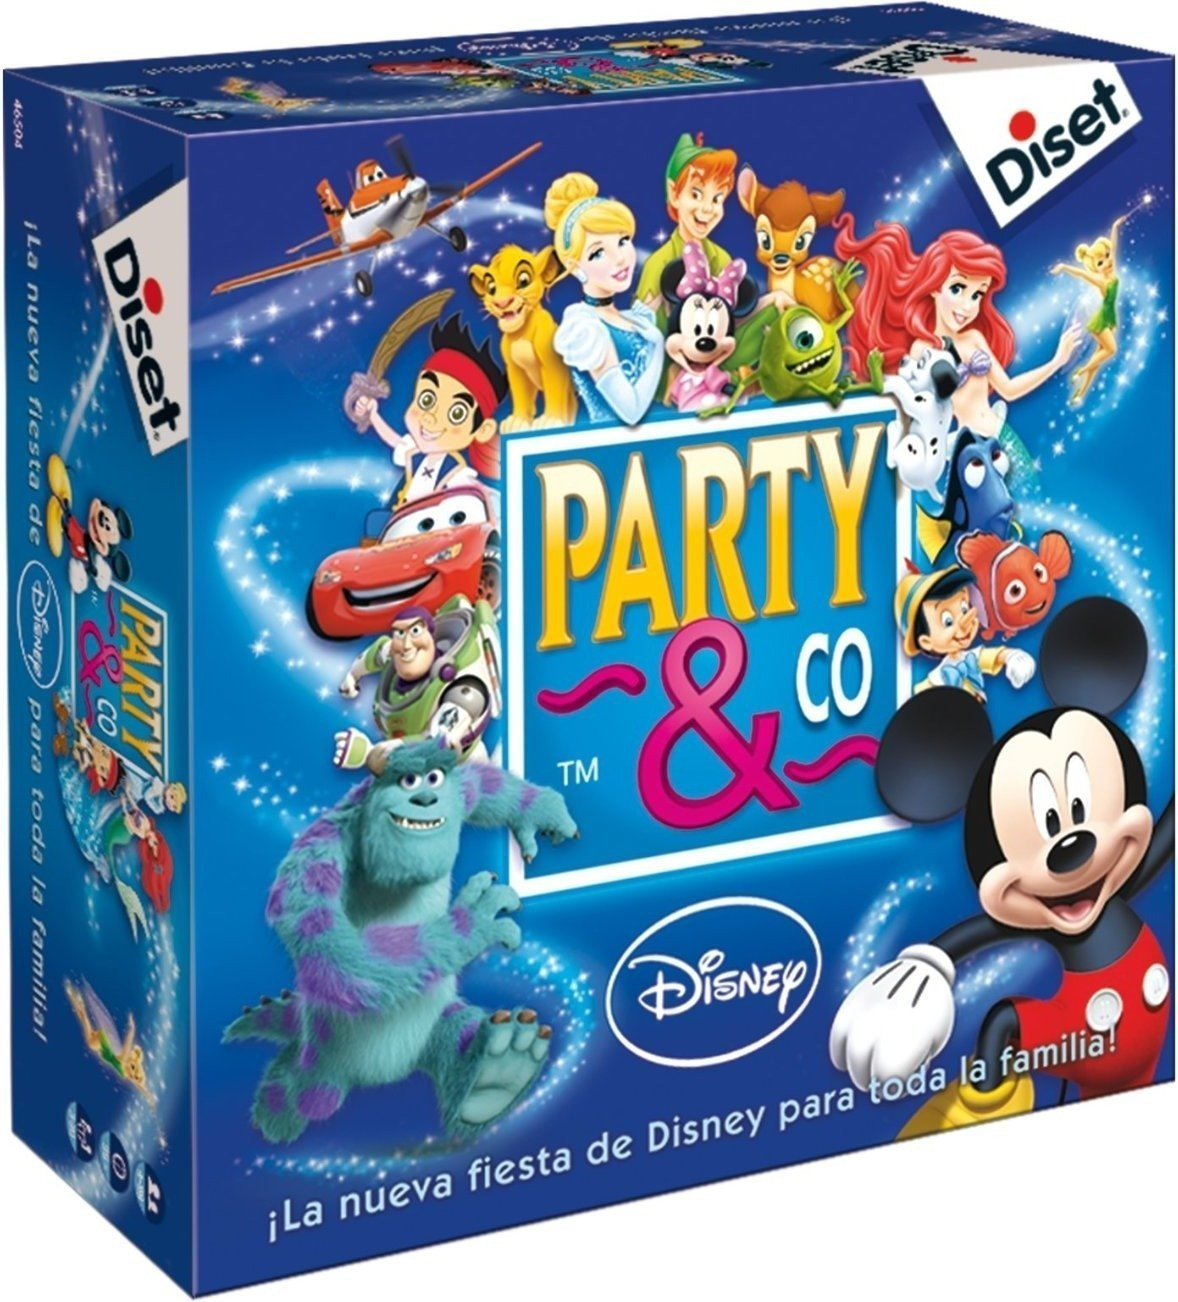 Party & Co. Disney - Party & Co.